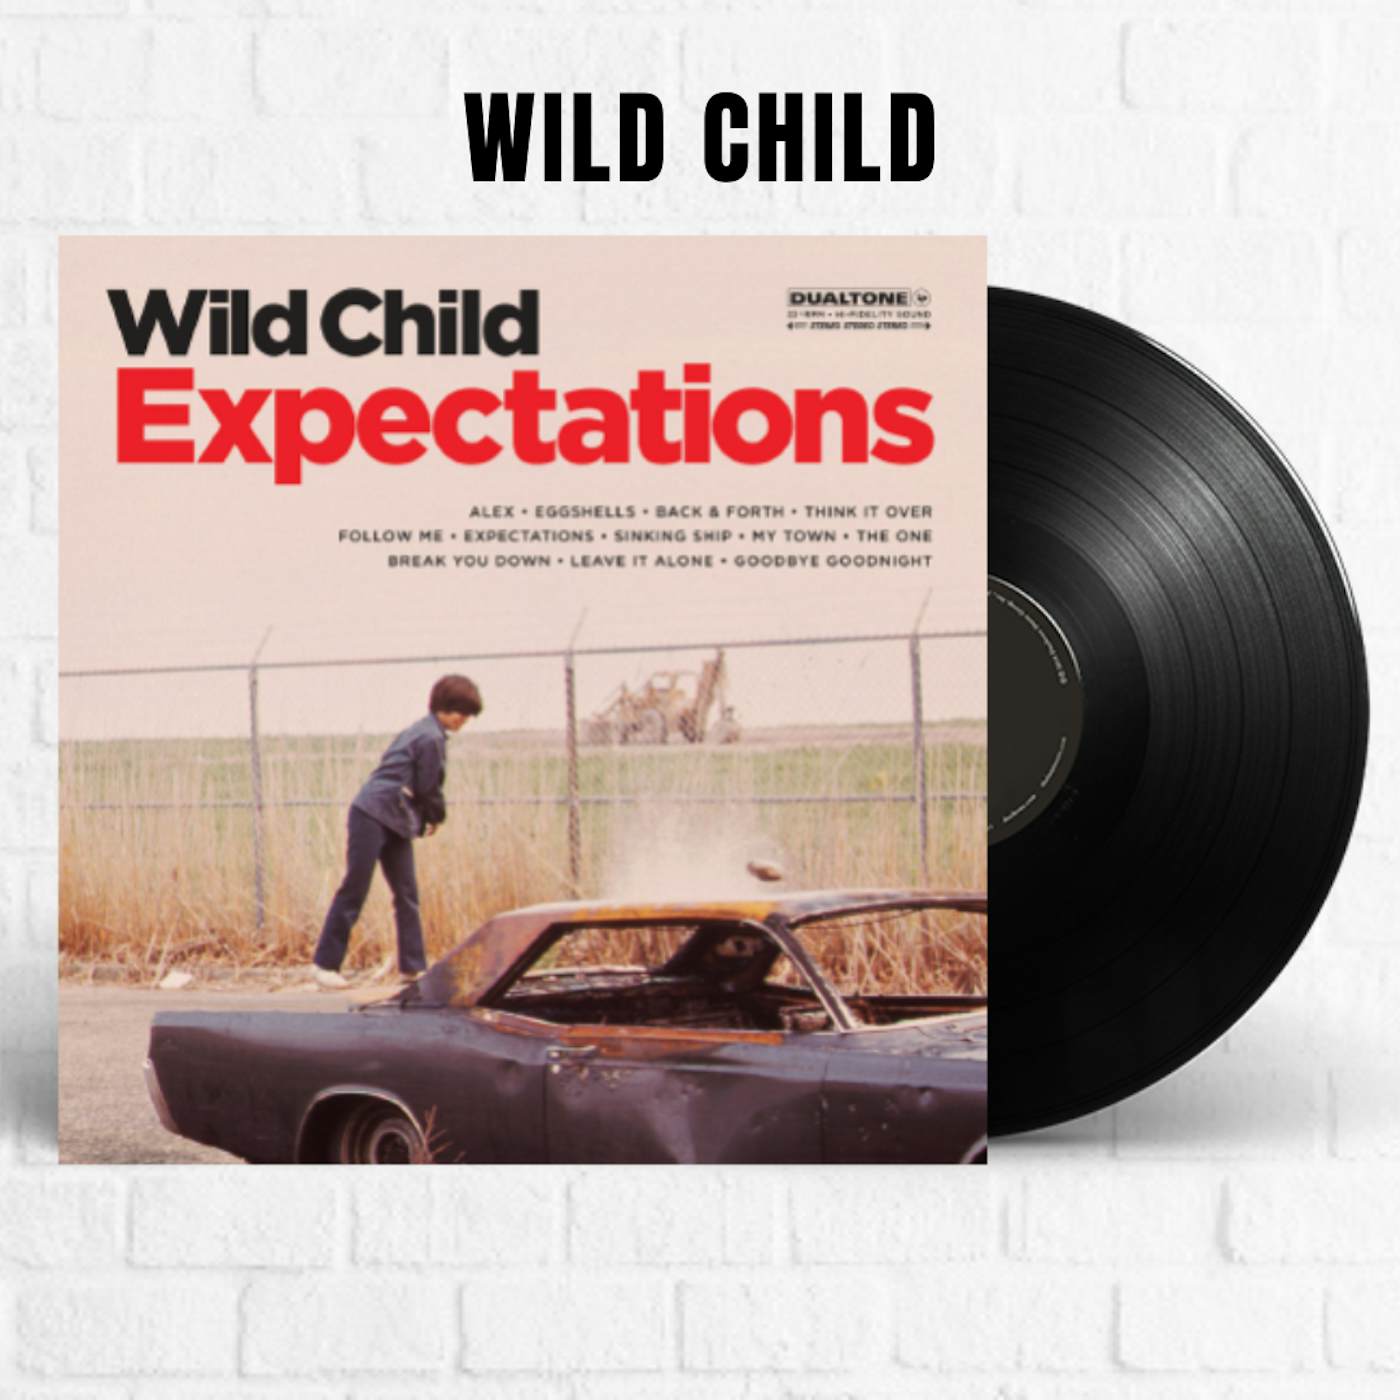 Wild Child Expectations